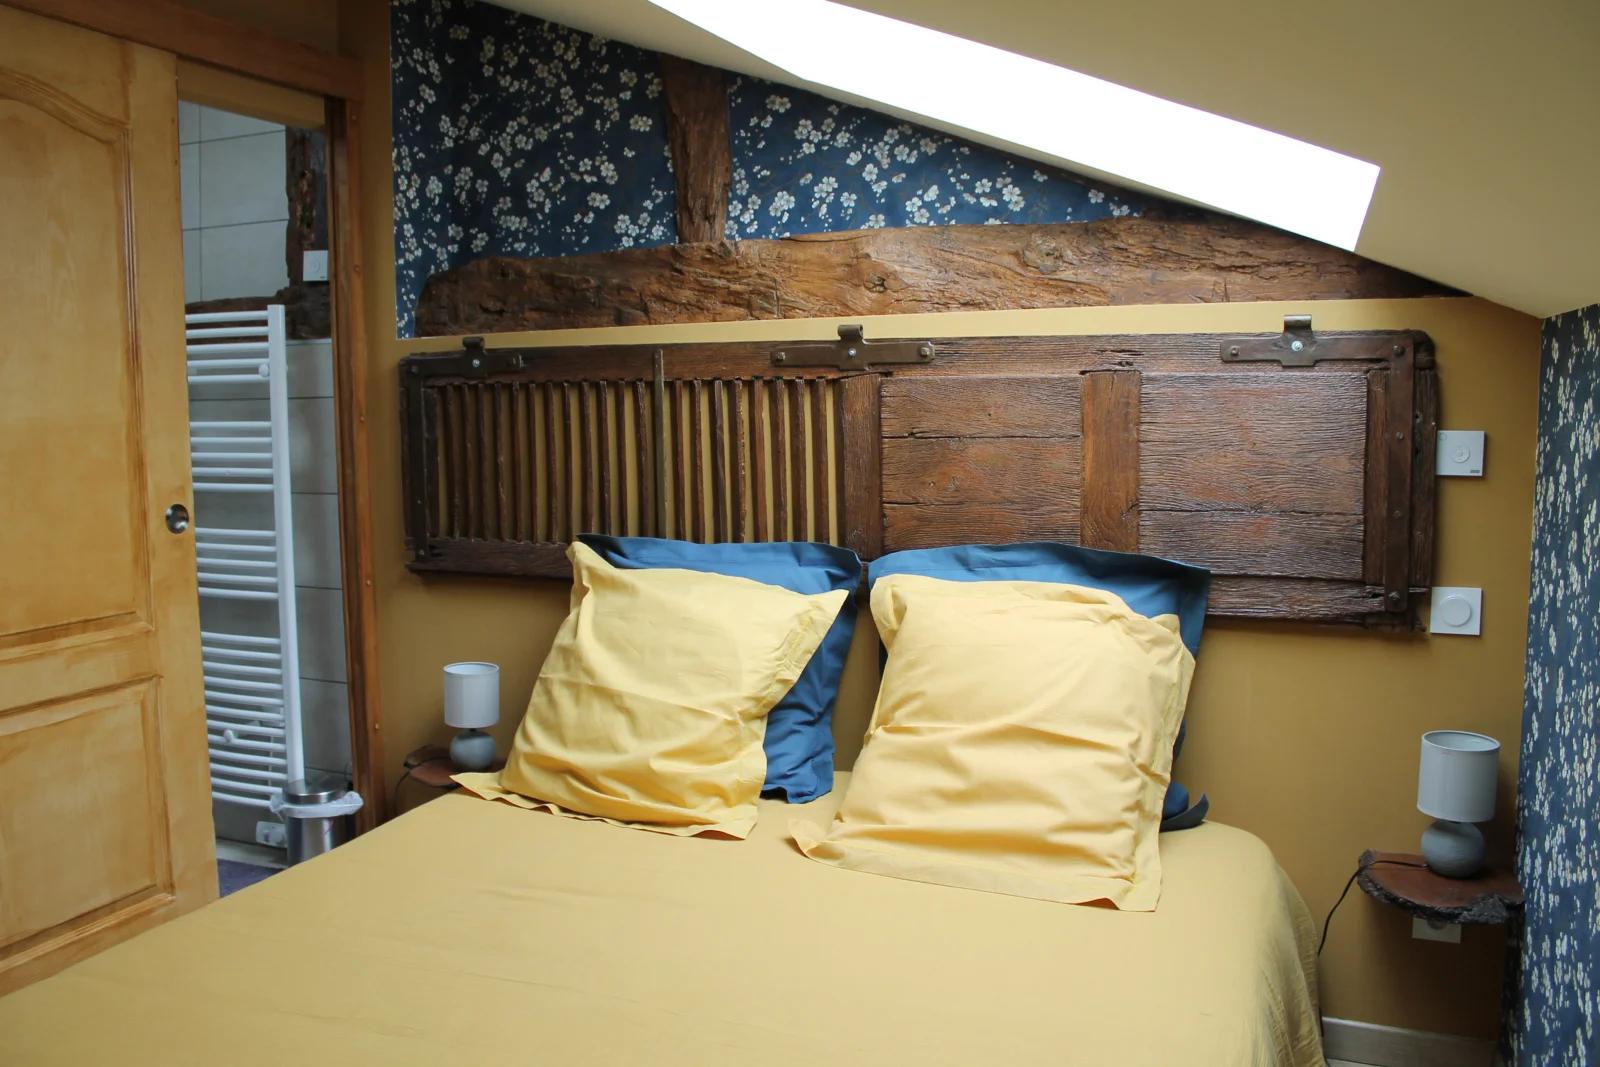 Bedroom in Ma longere bressane - 5